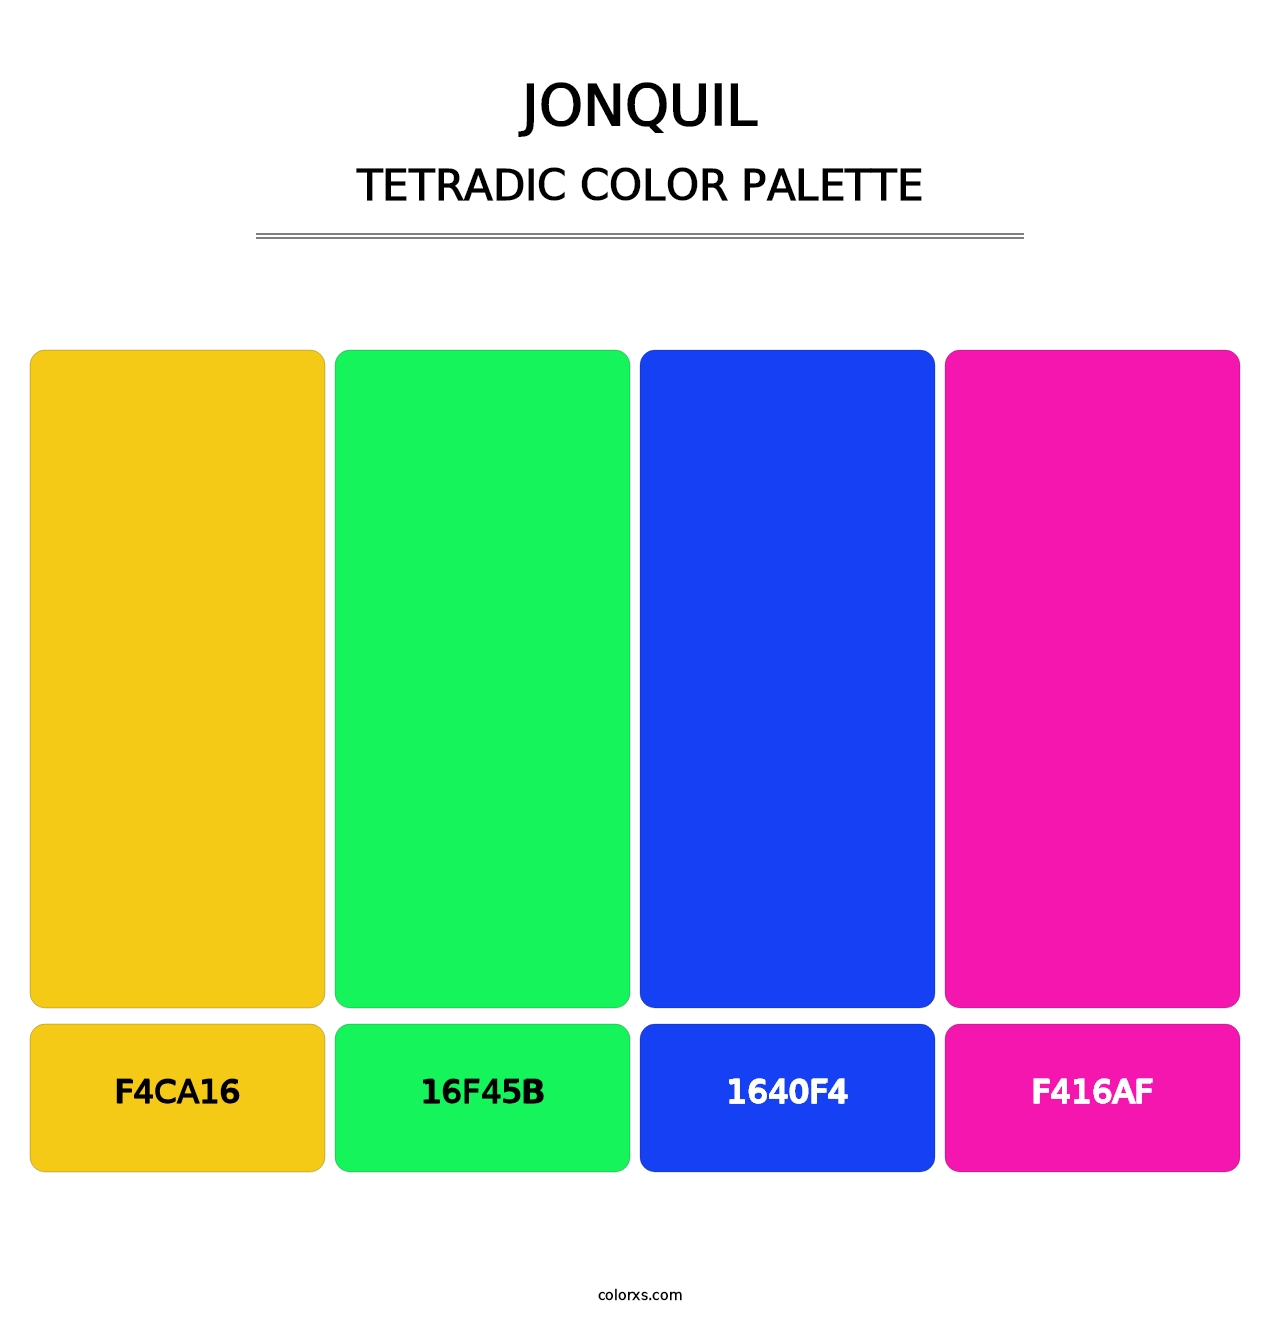 Jonquil - Tetradic Color Palette